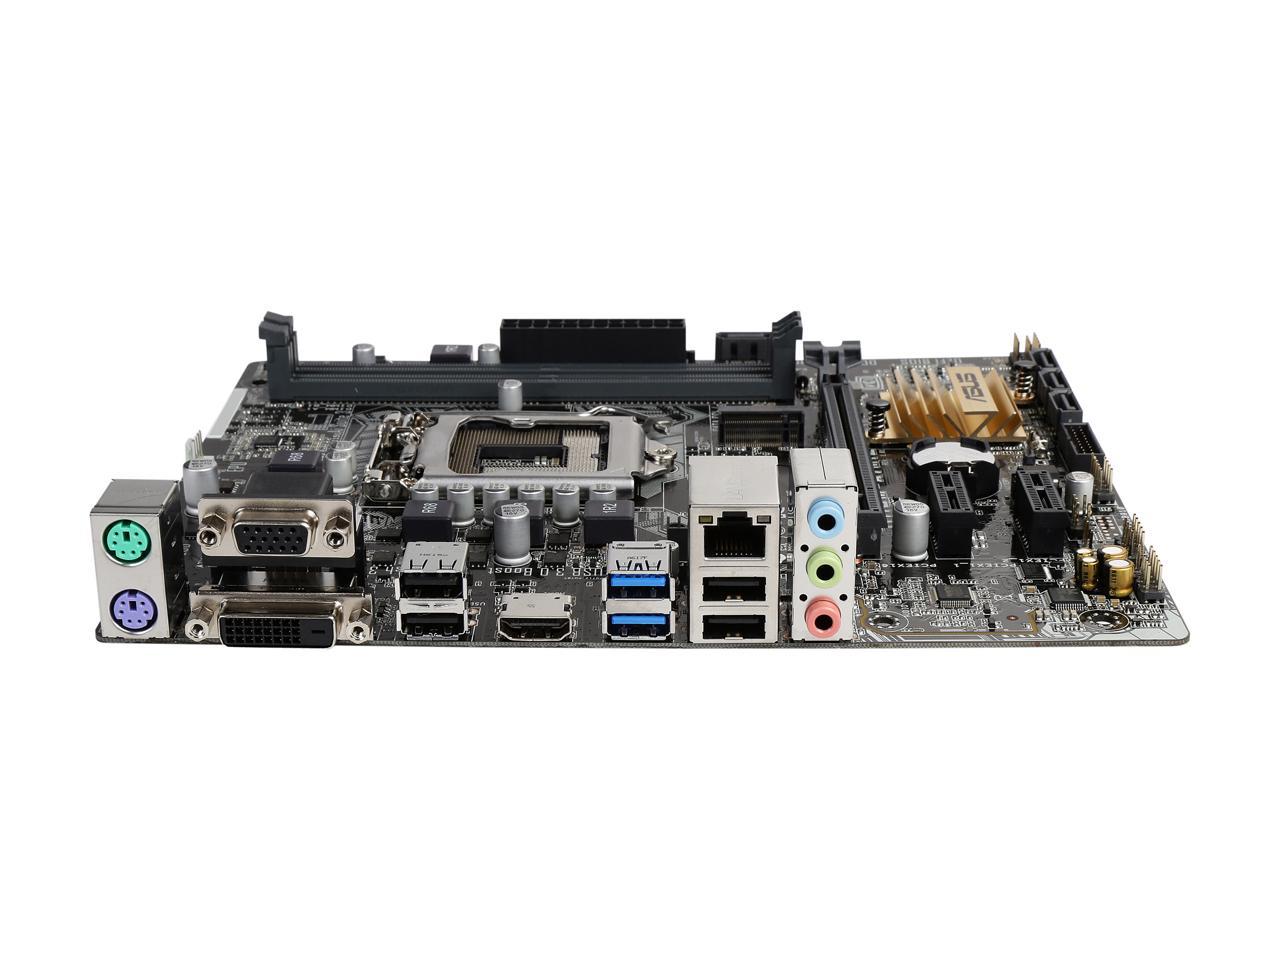 ASUS - MOTHERBOARDS H110M-A/M.2 Intel H110 HDMI SATA 6Gb/s USB 3.0 Micro ATX Motherboards - Intel